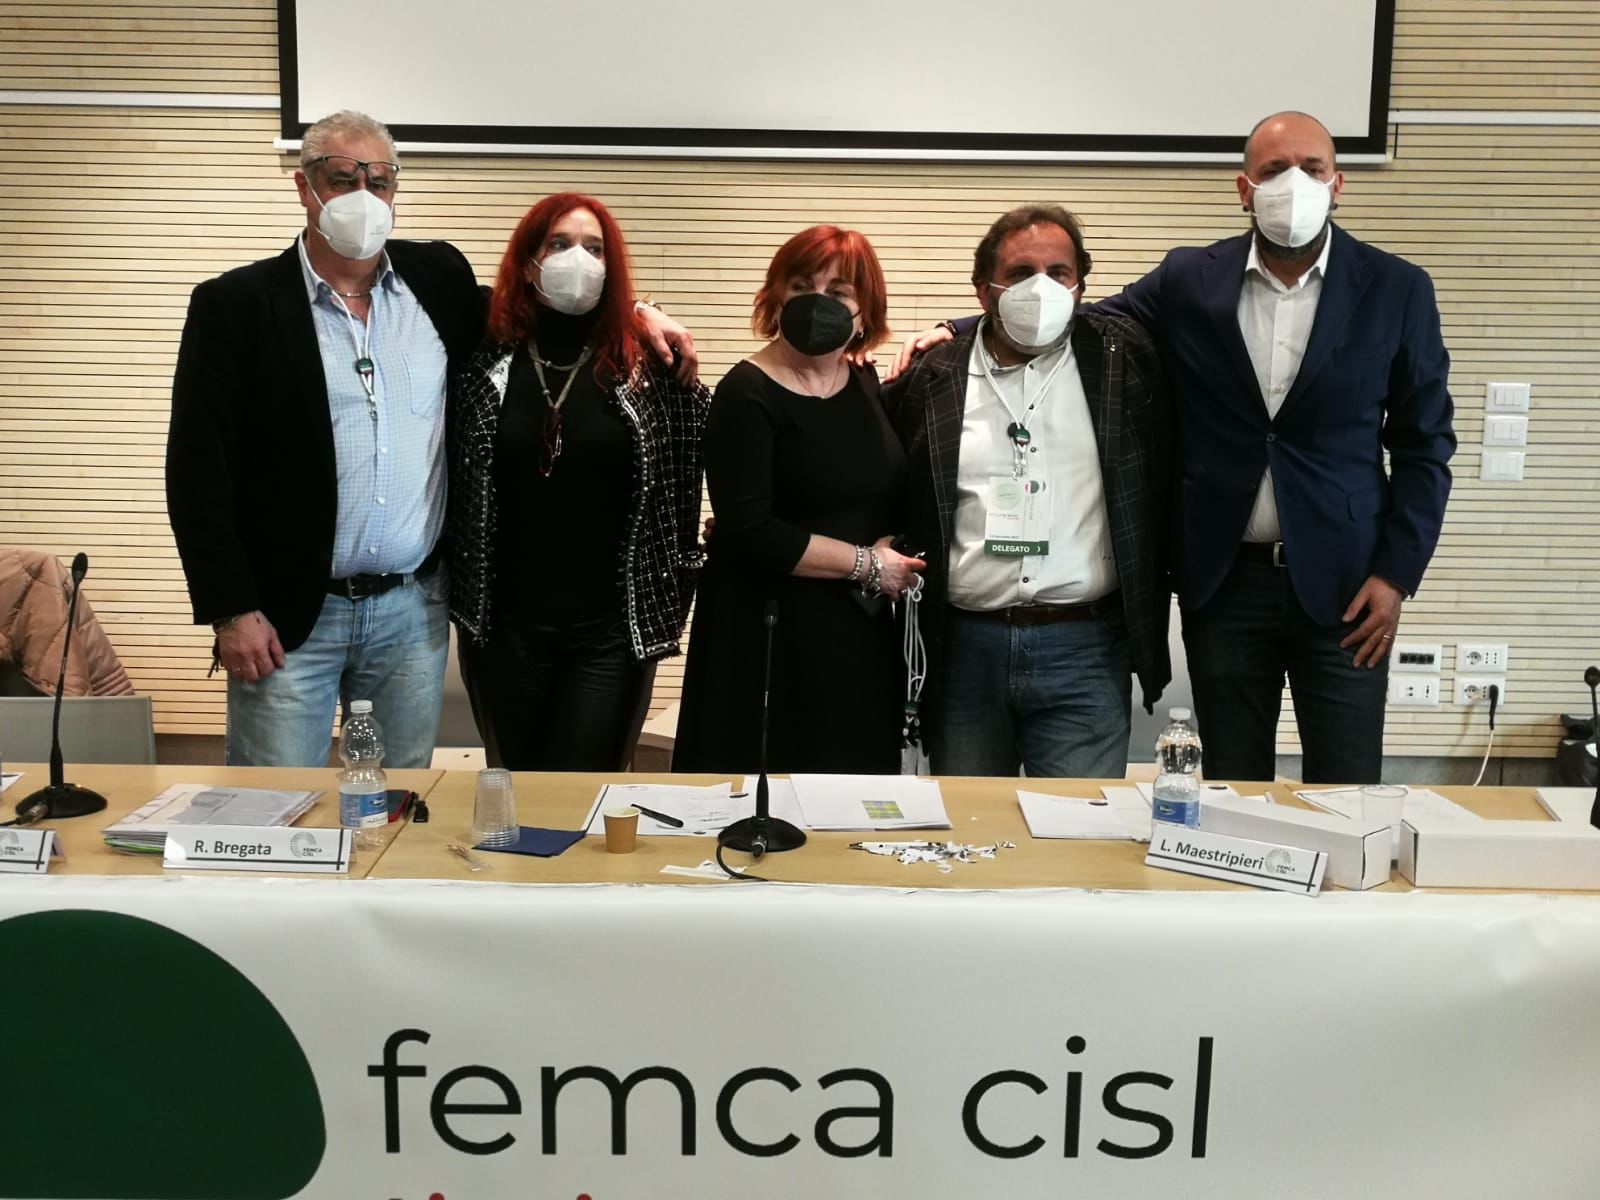 Liguria, la Femca Cisl conferma Romeo Bregata come segretario generale